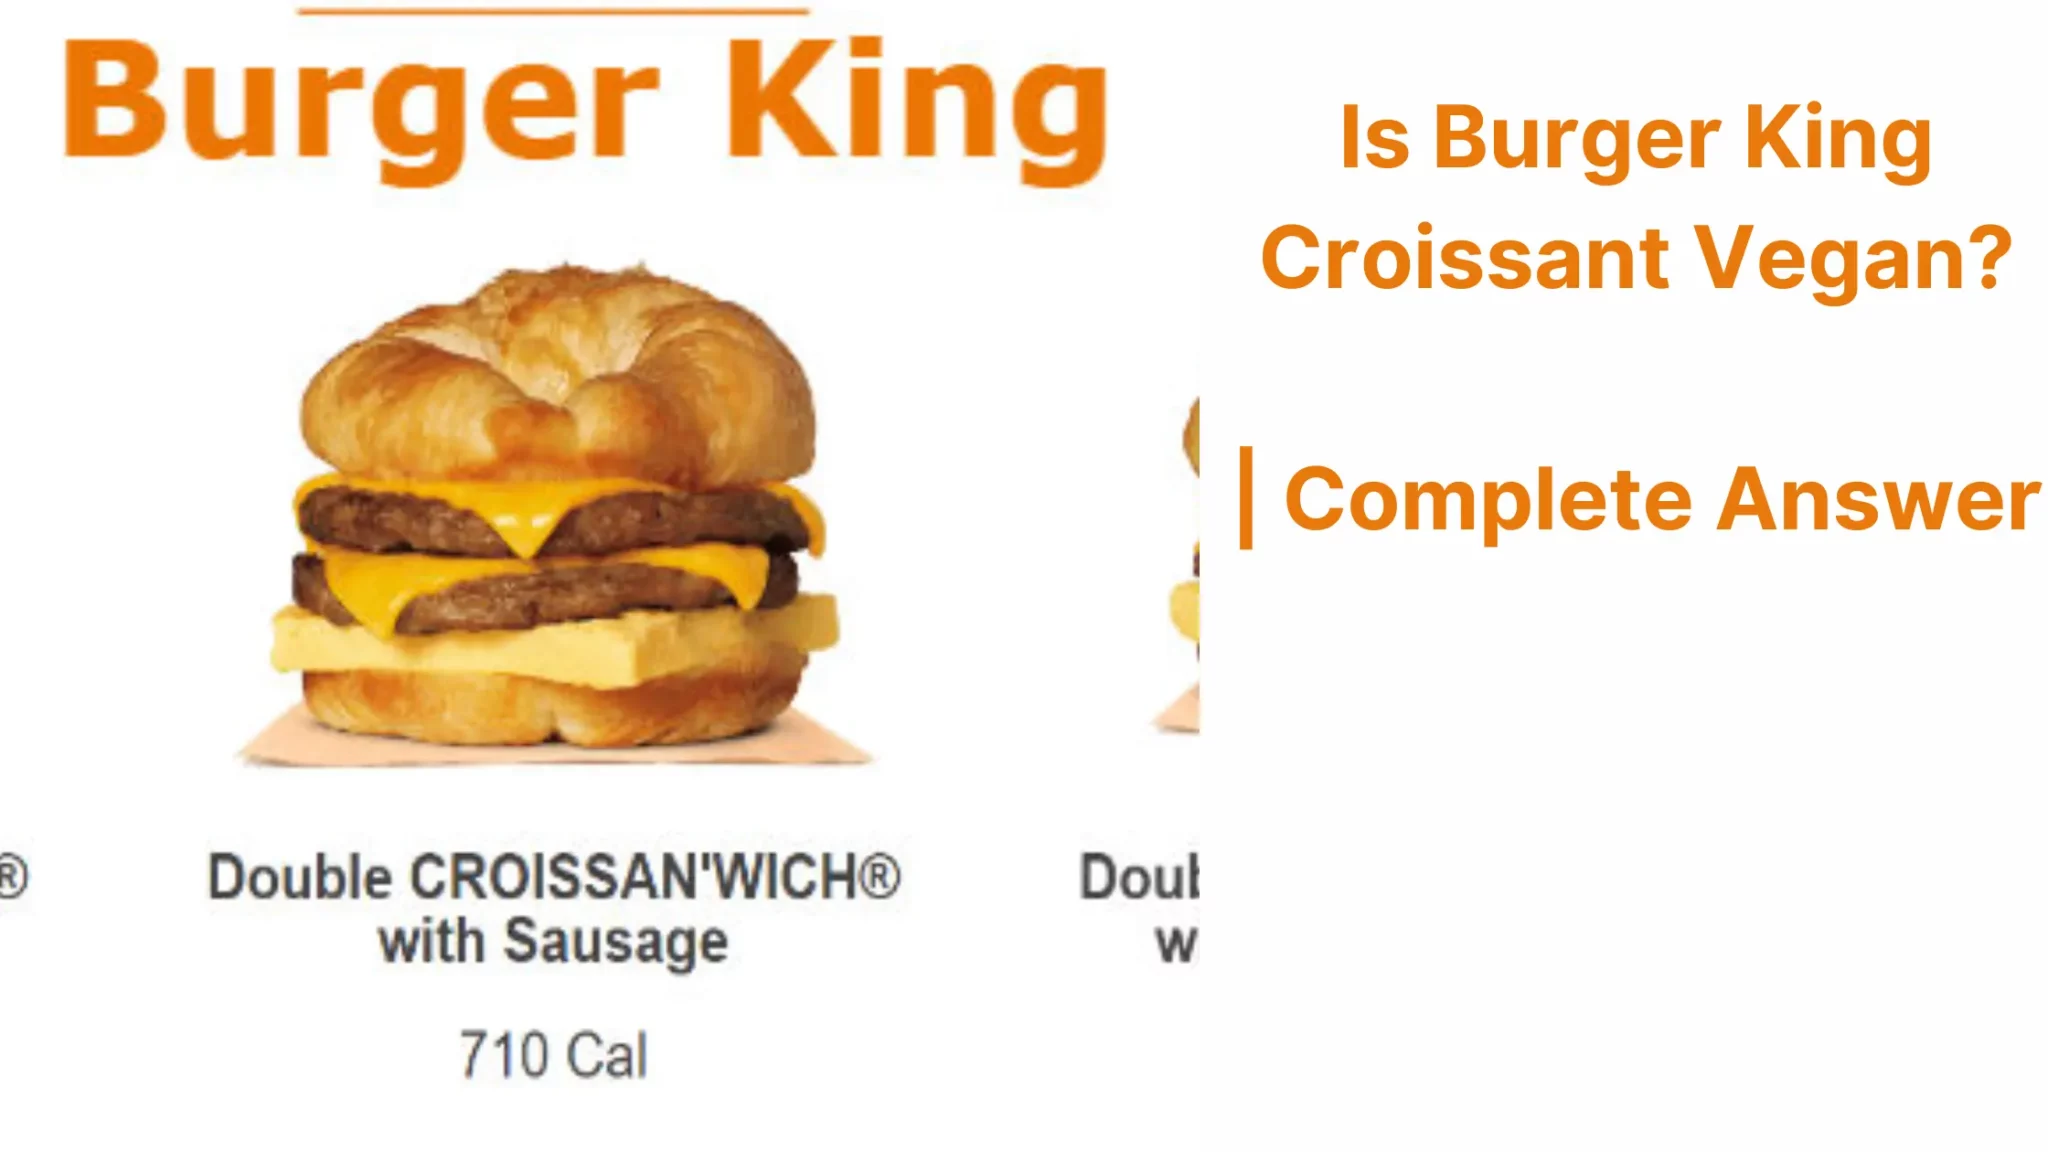 Is Burger King Croissant Vegan?